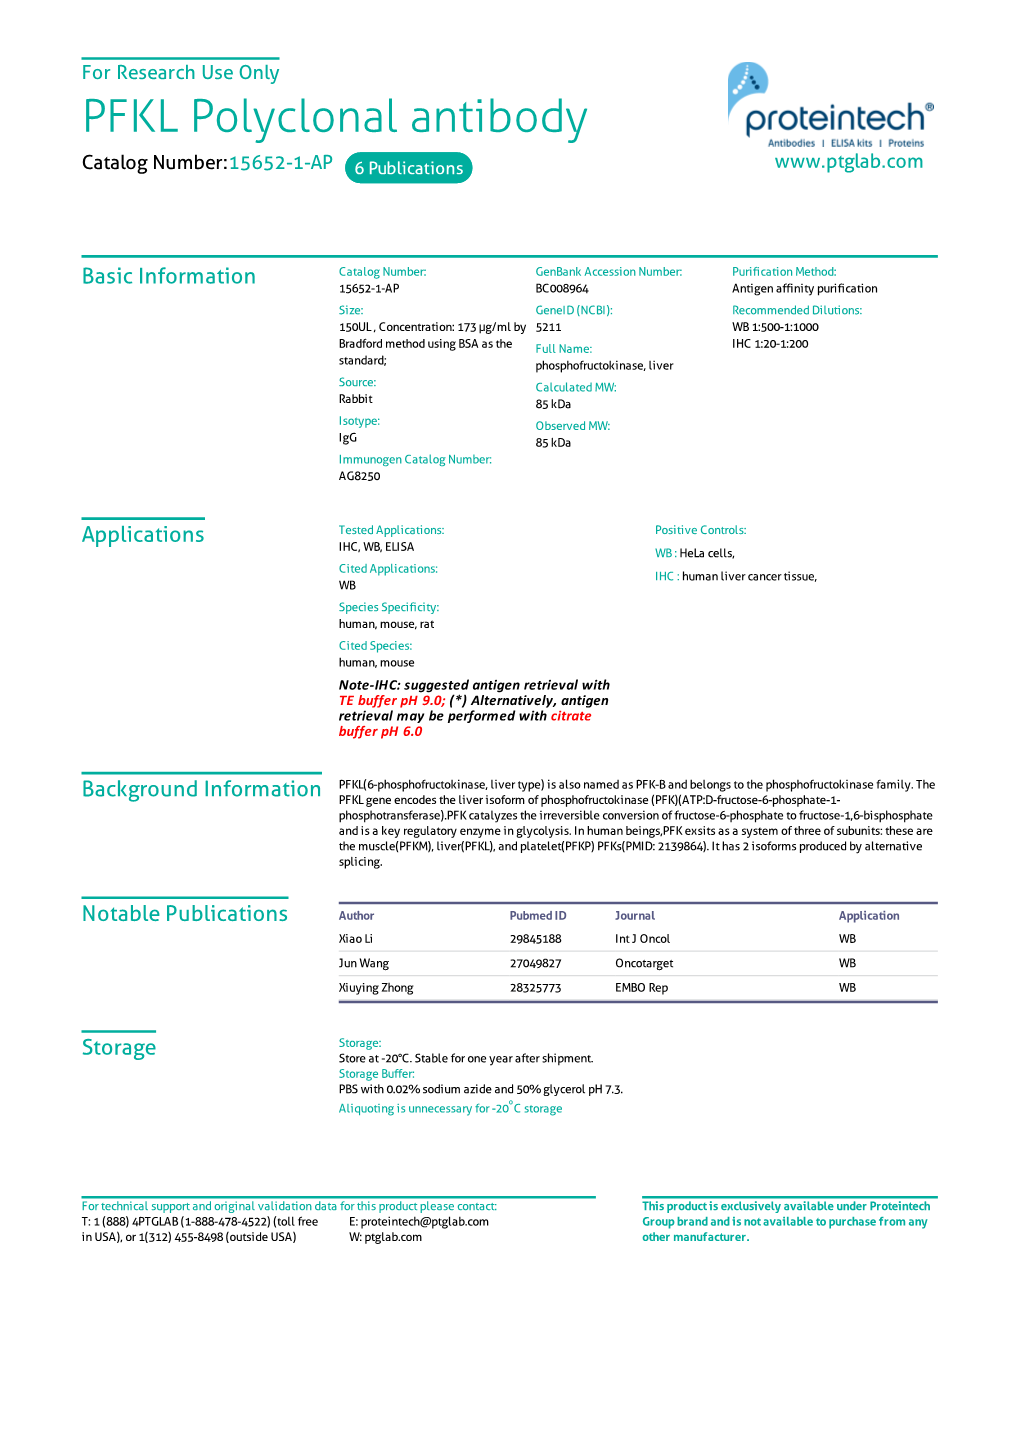 PFKL Polyclonal Antibody Catalog Number:15652-1-AP 6 Publications